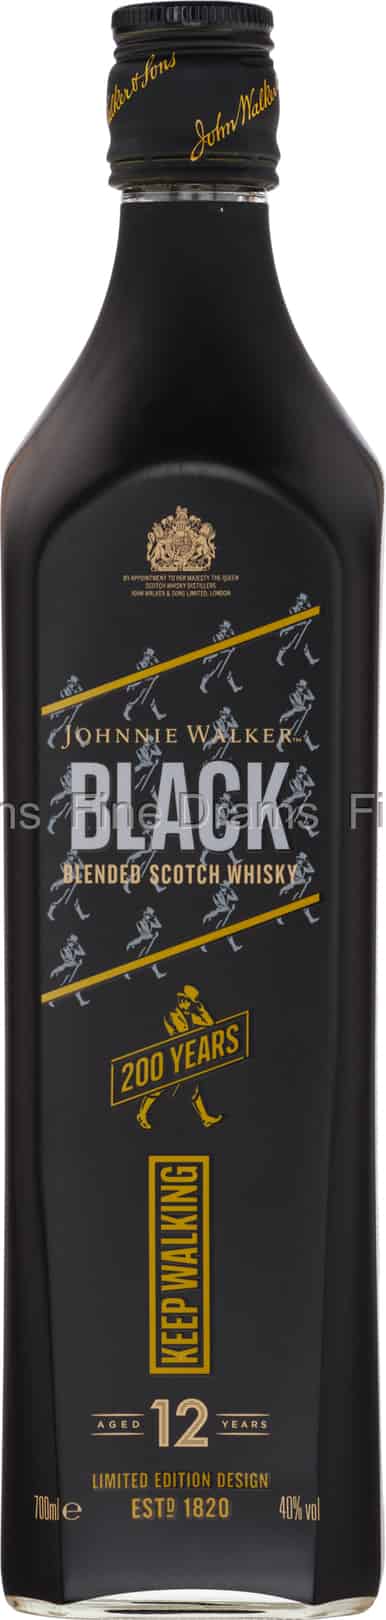 Johnnie Walker Black Label 12 Year Old - 200th Anniversary